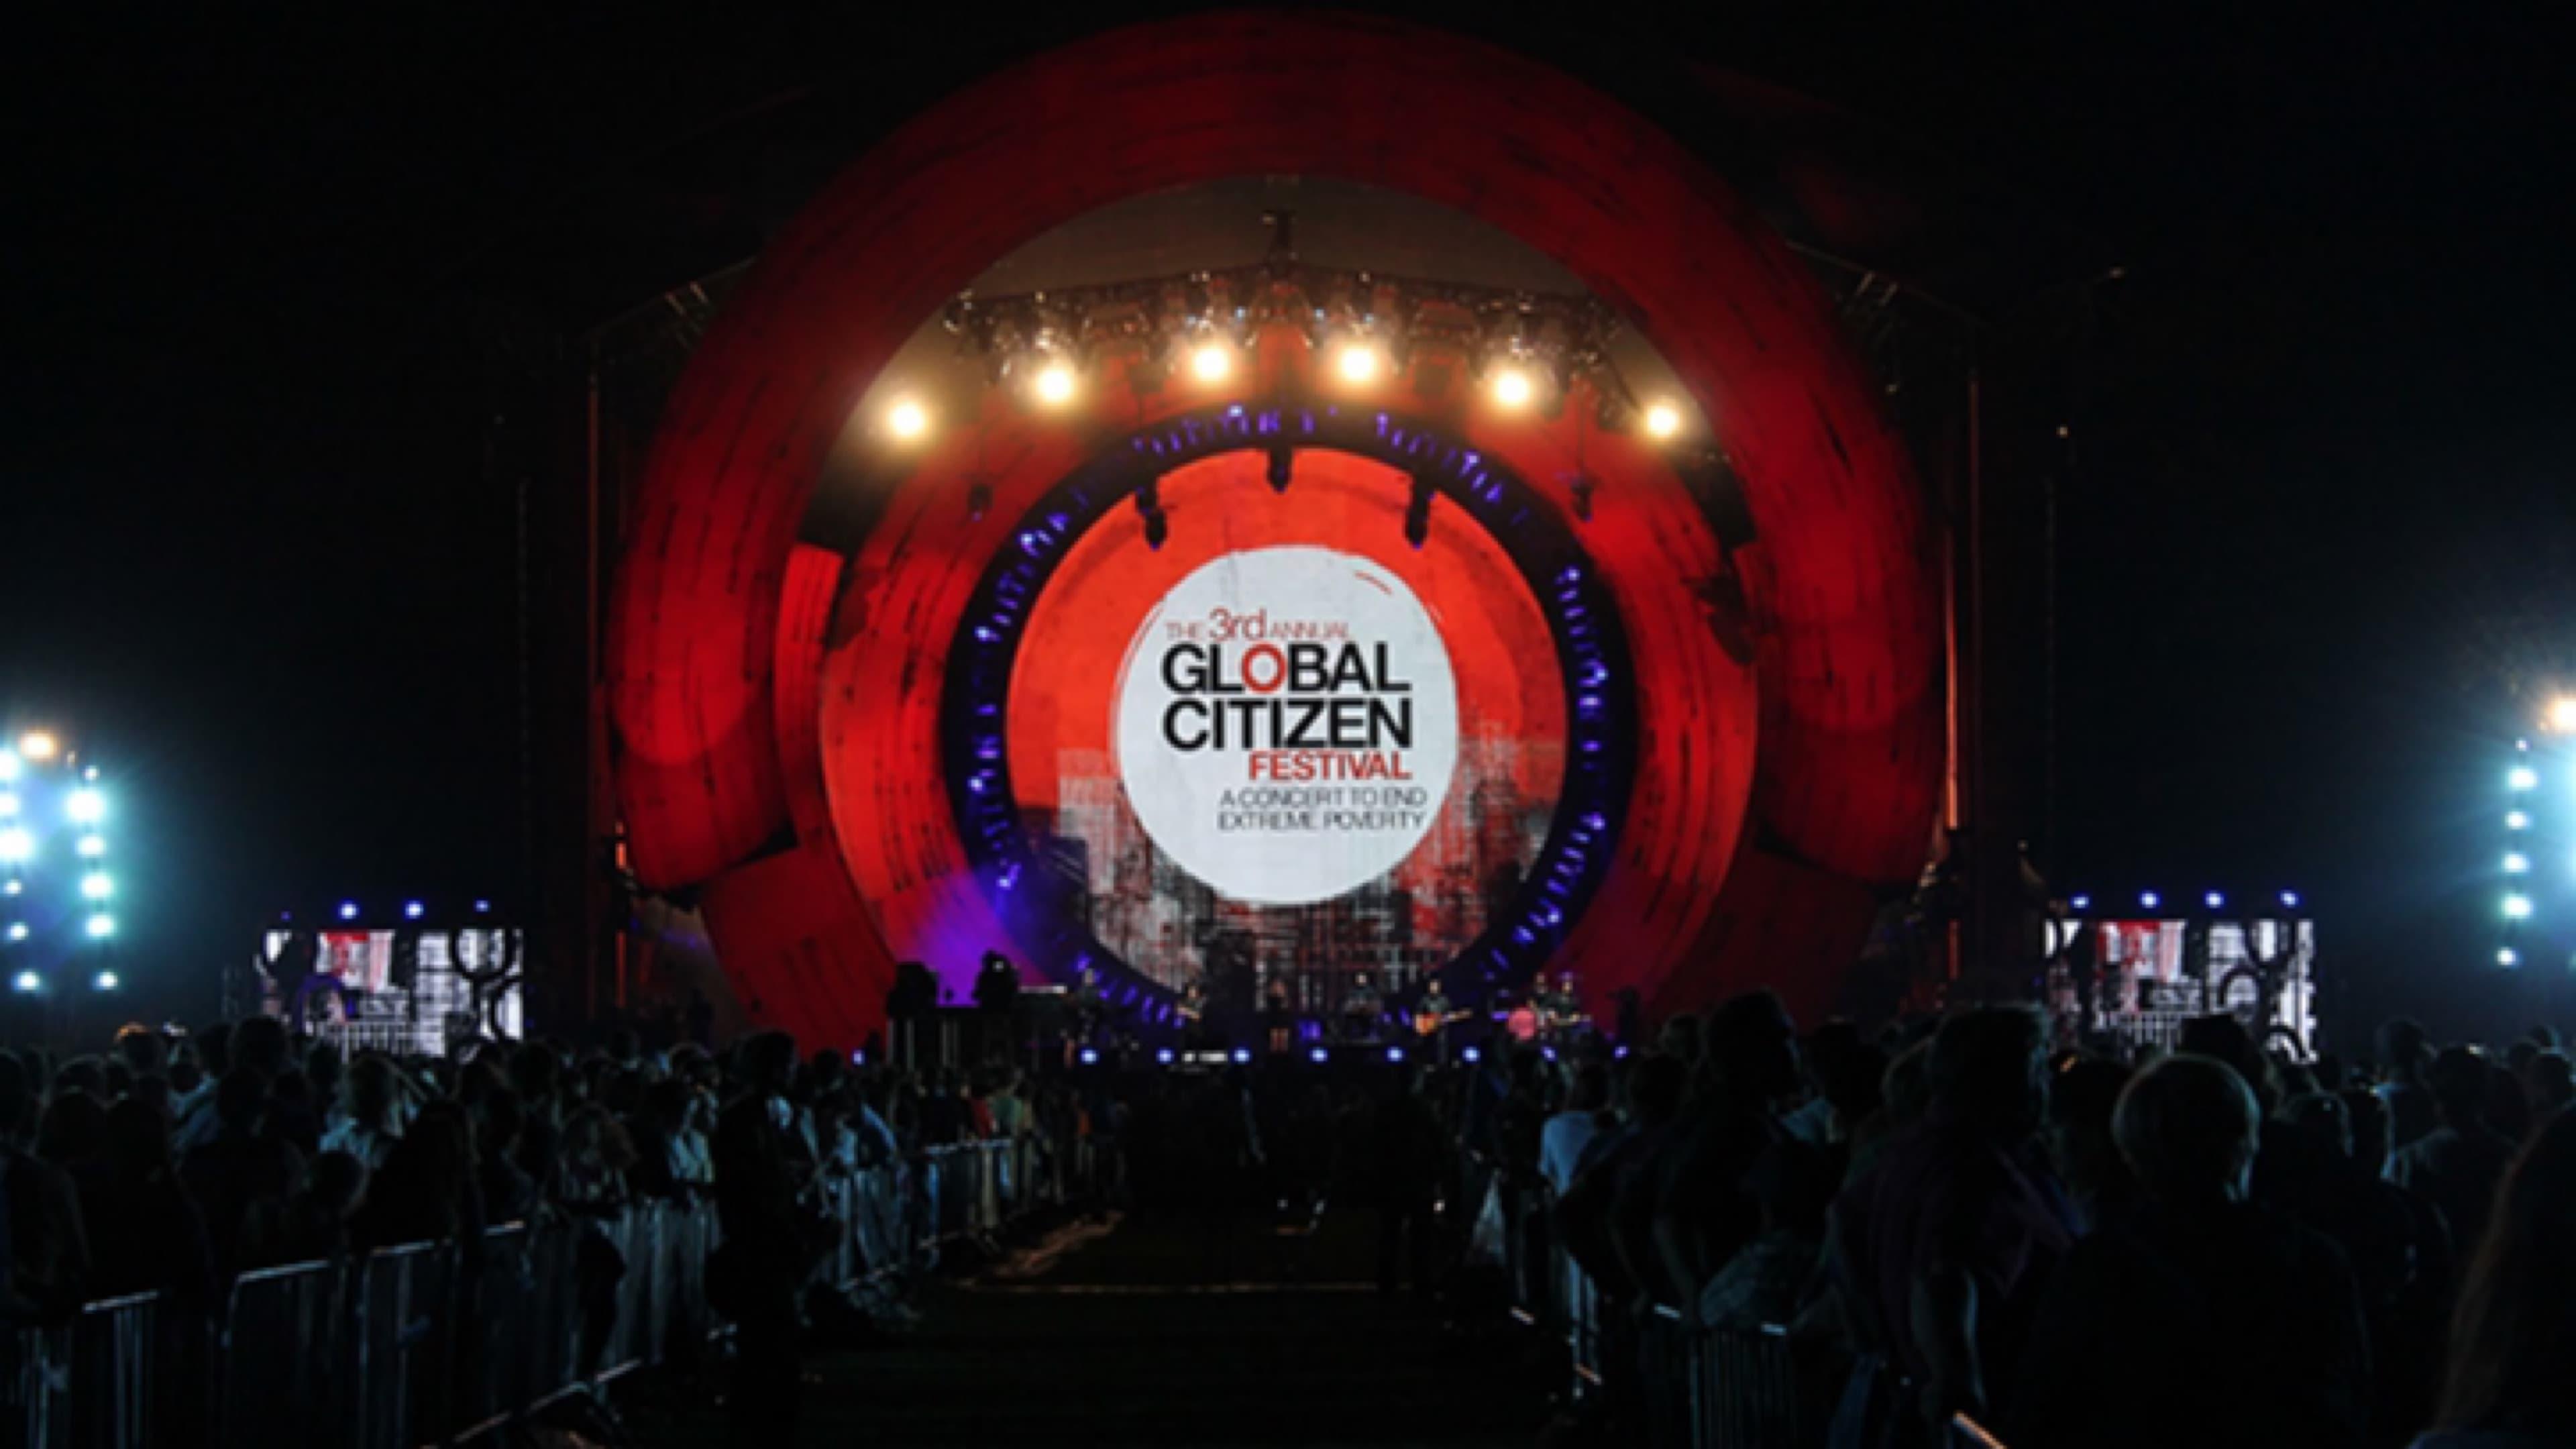 Global Citizen Festival 2014 backdrop